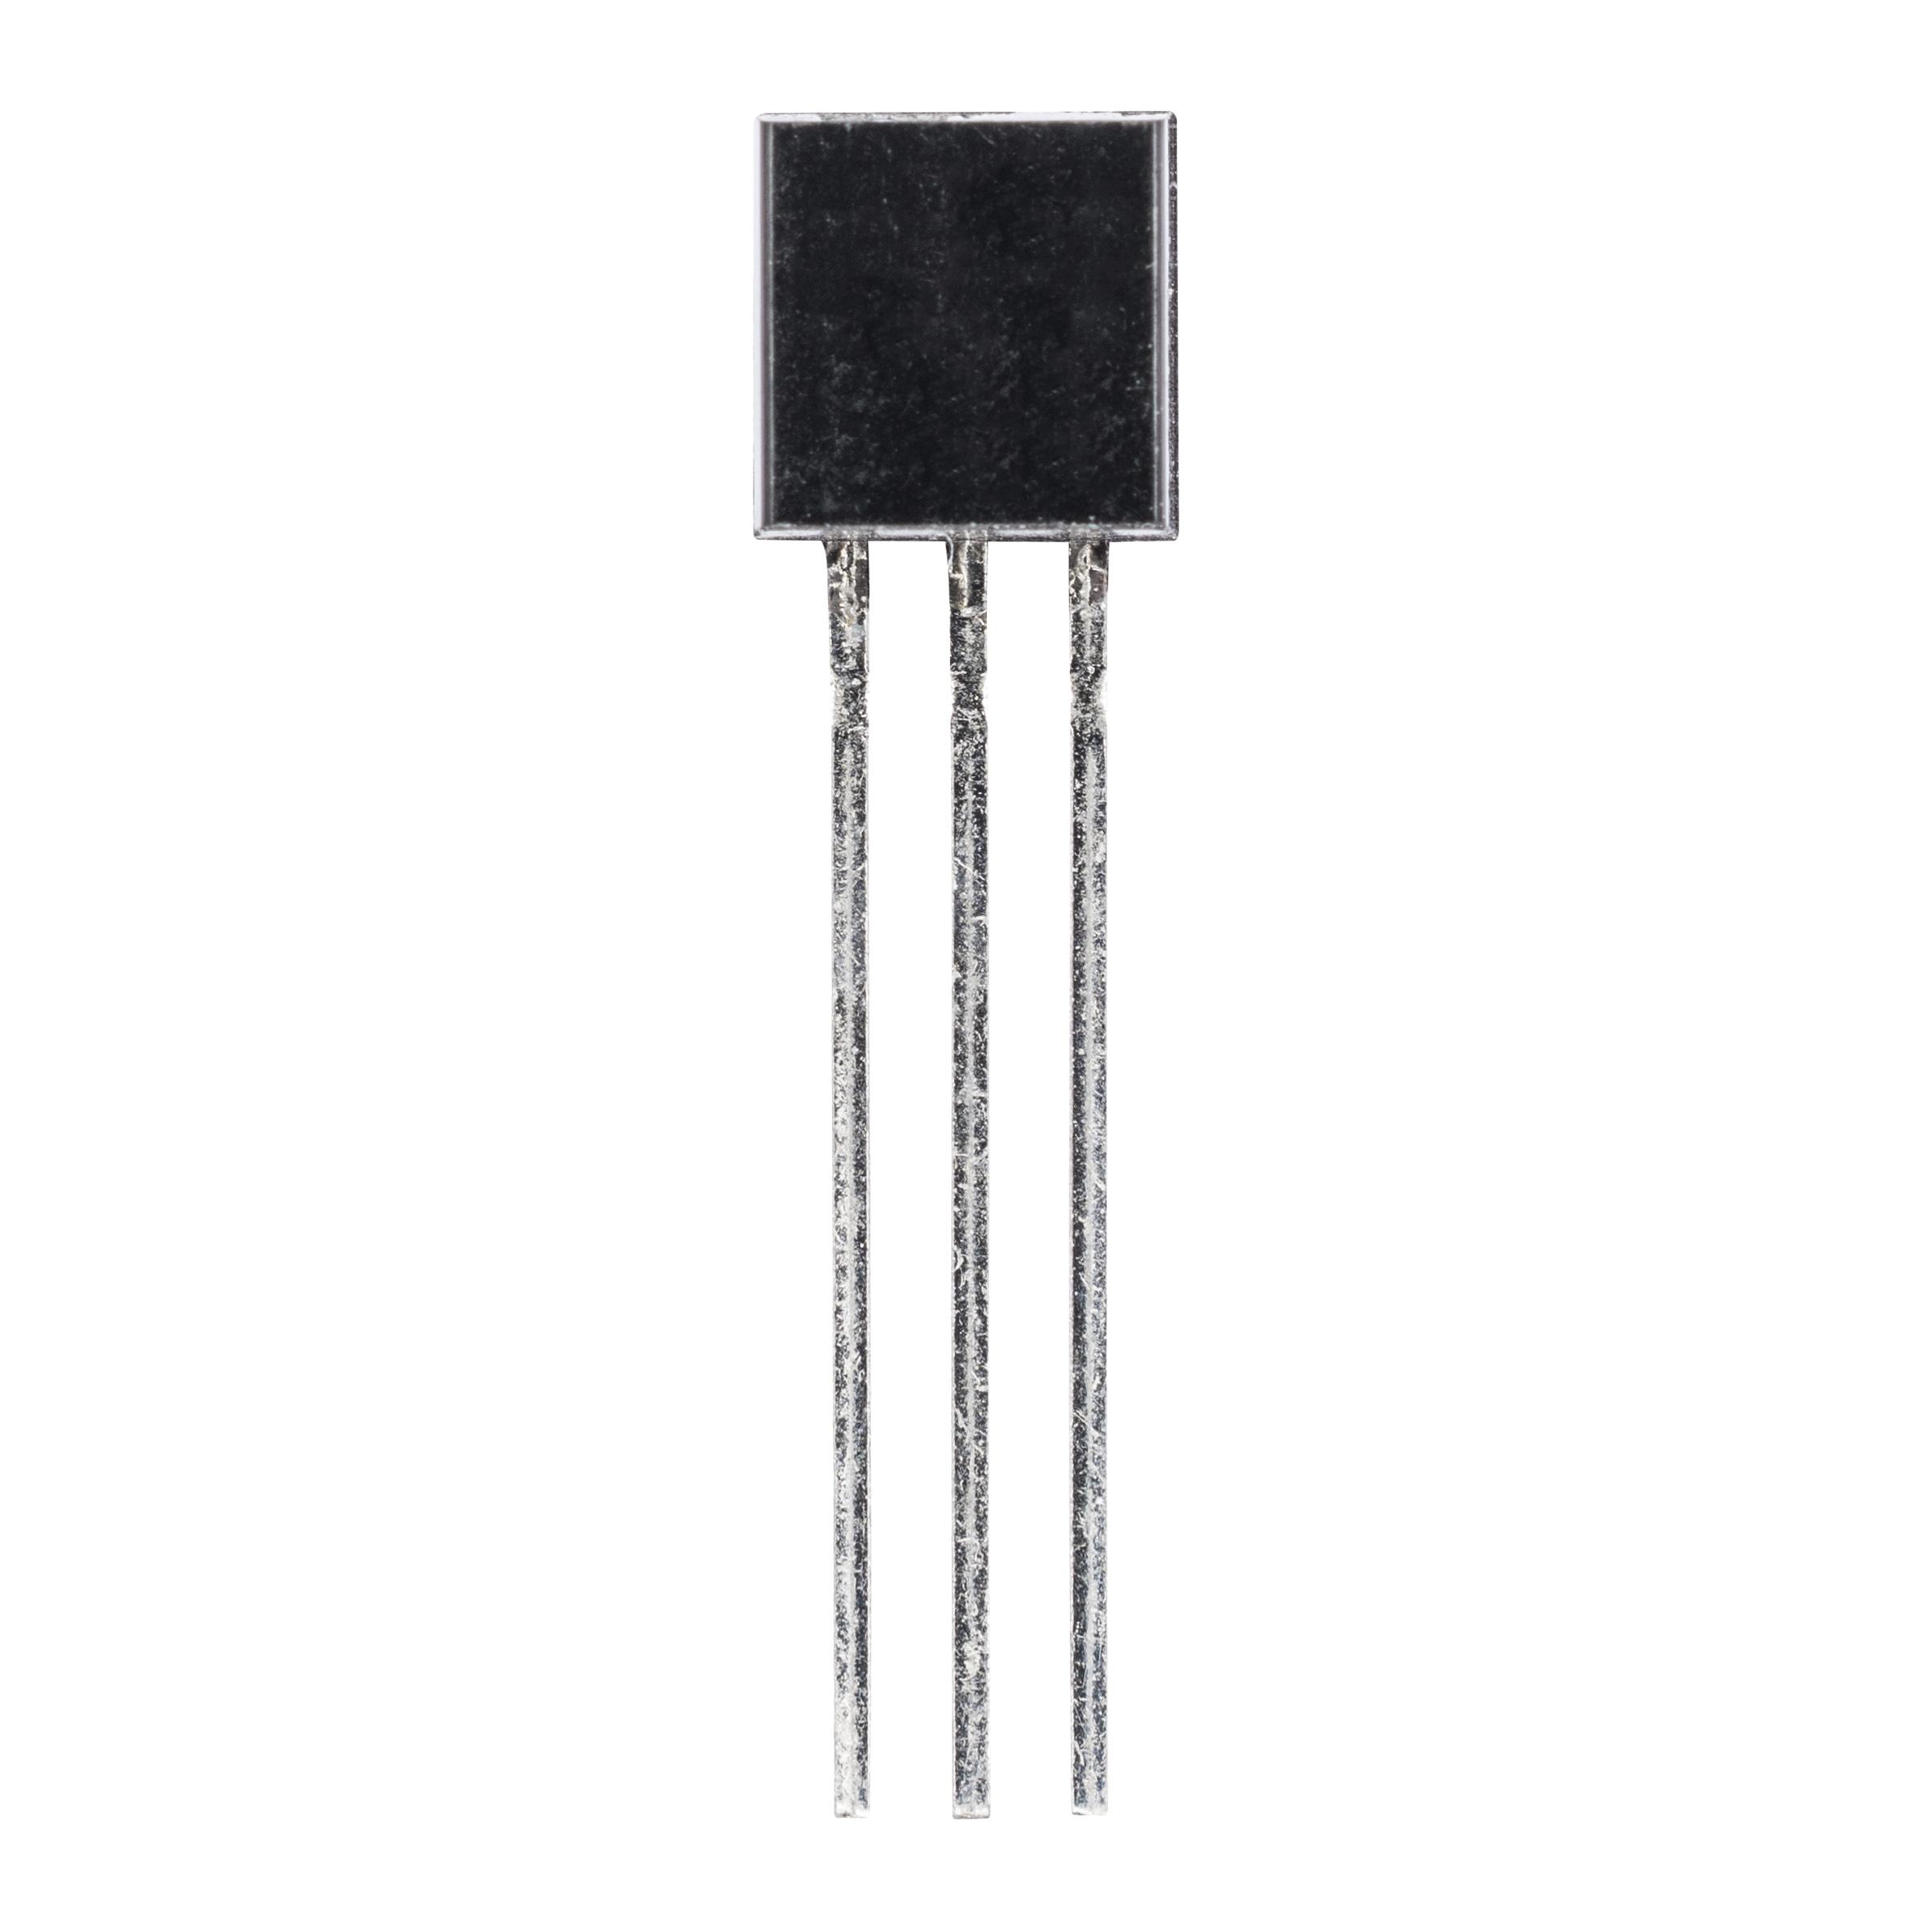 2N3904G (Bipolartransistor NPN)